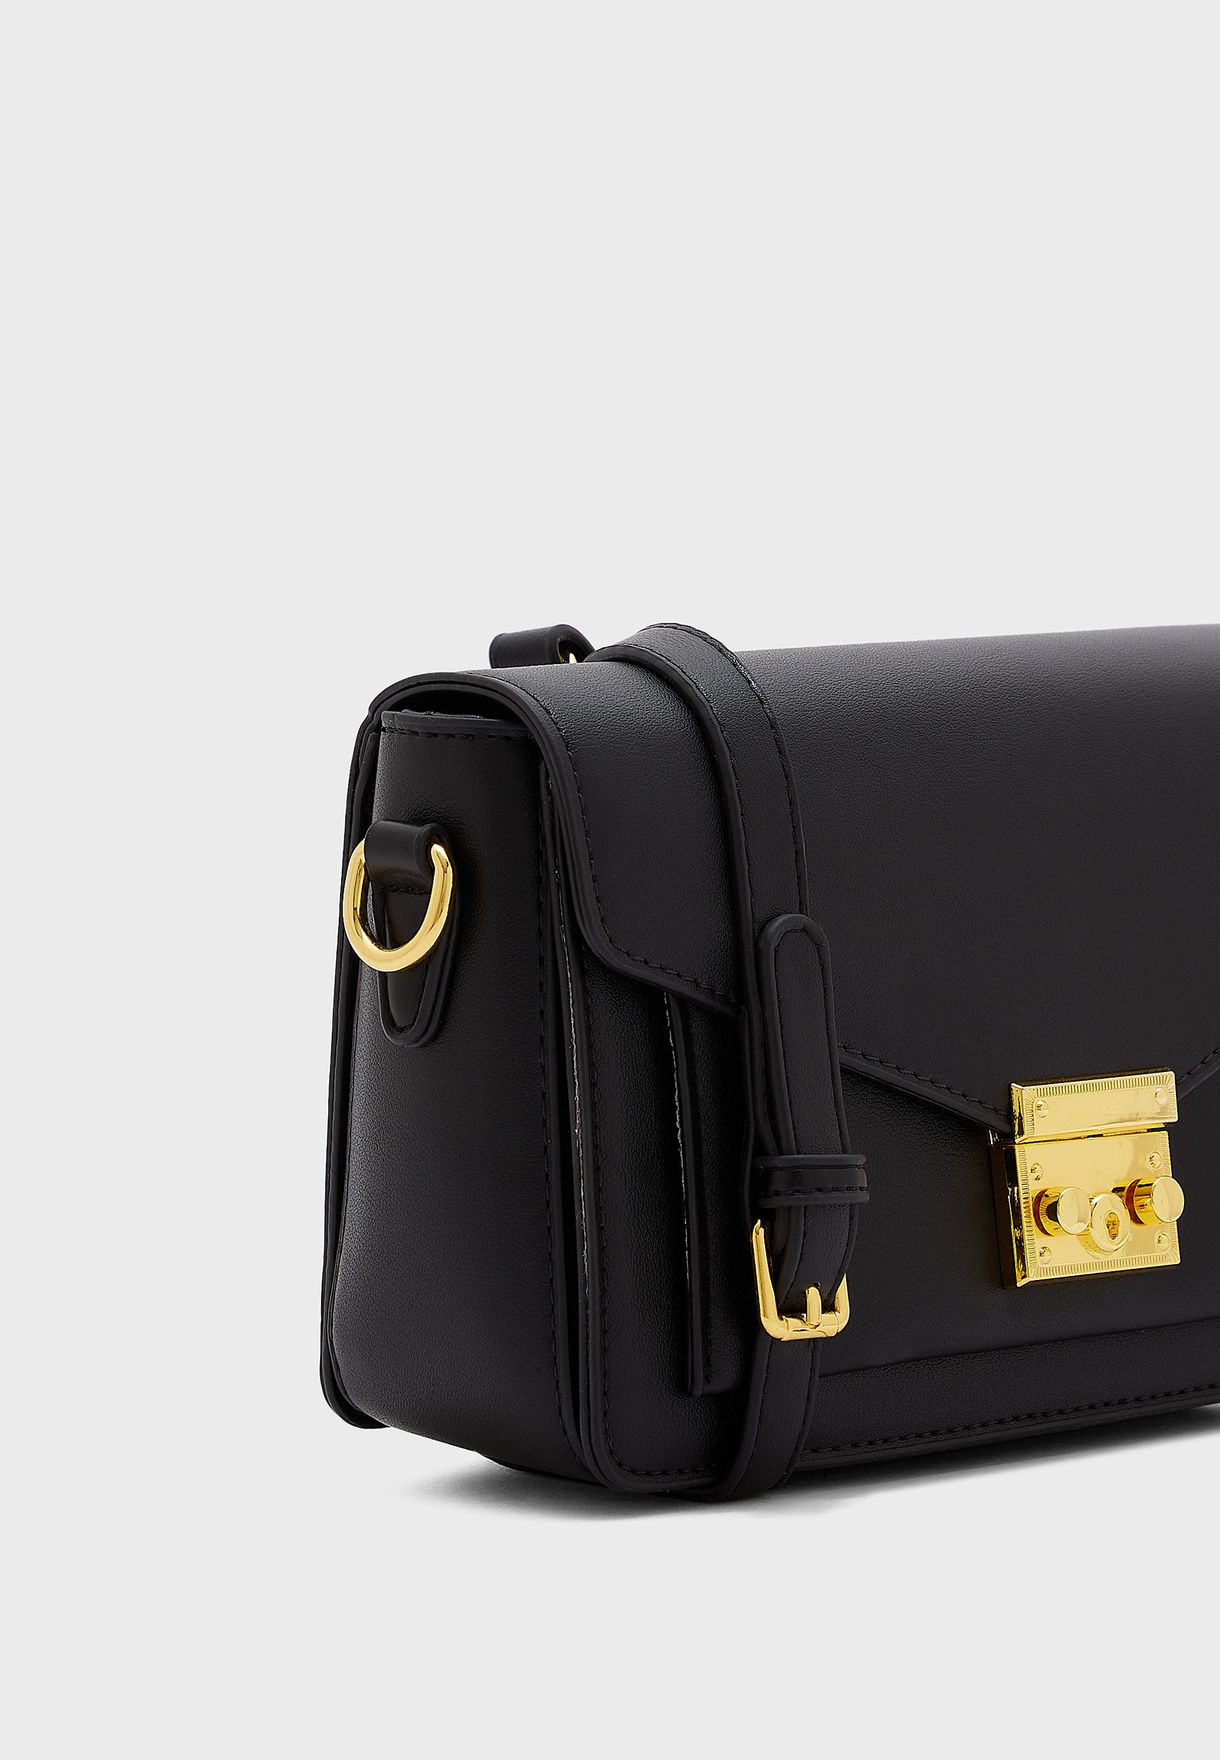 Handbag With Front Pocket